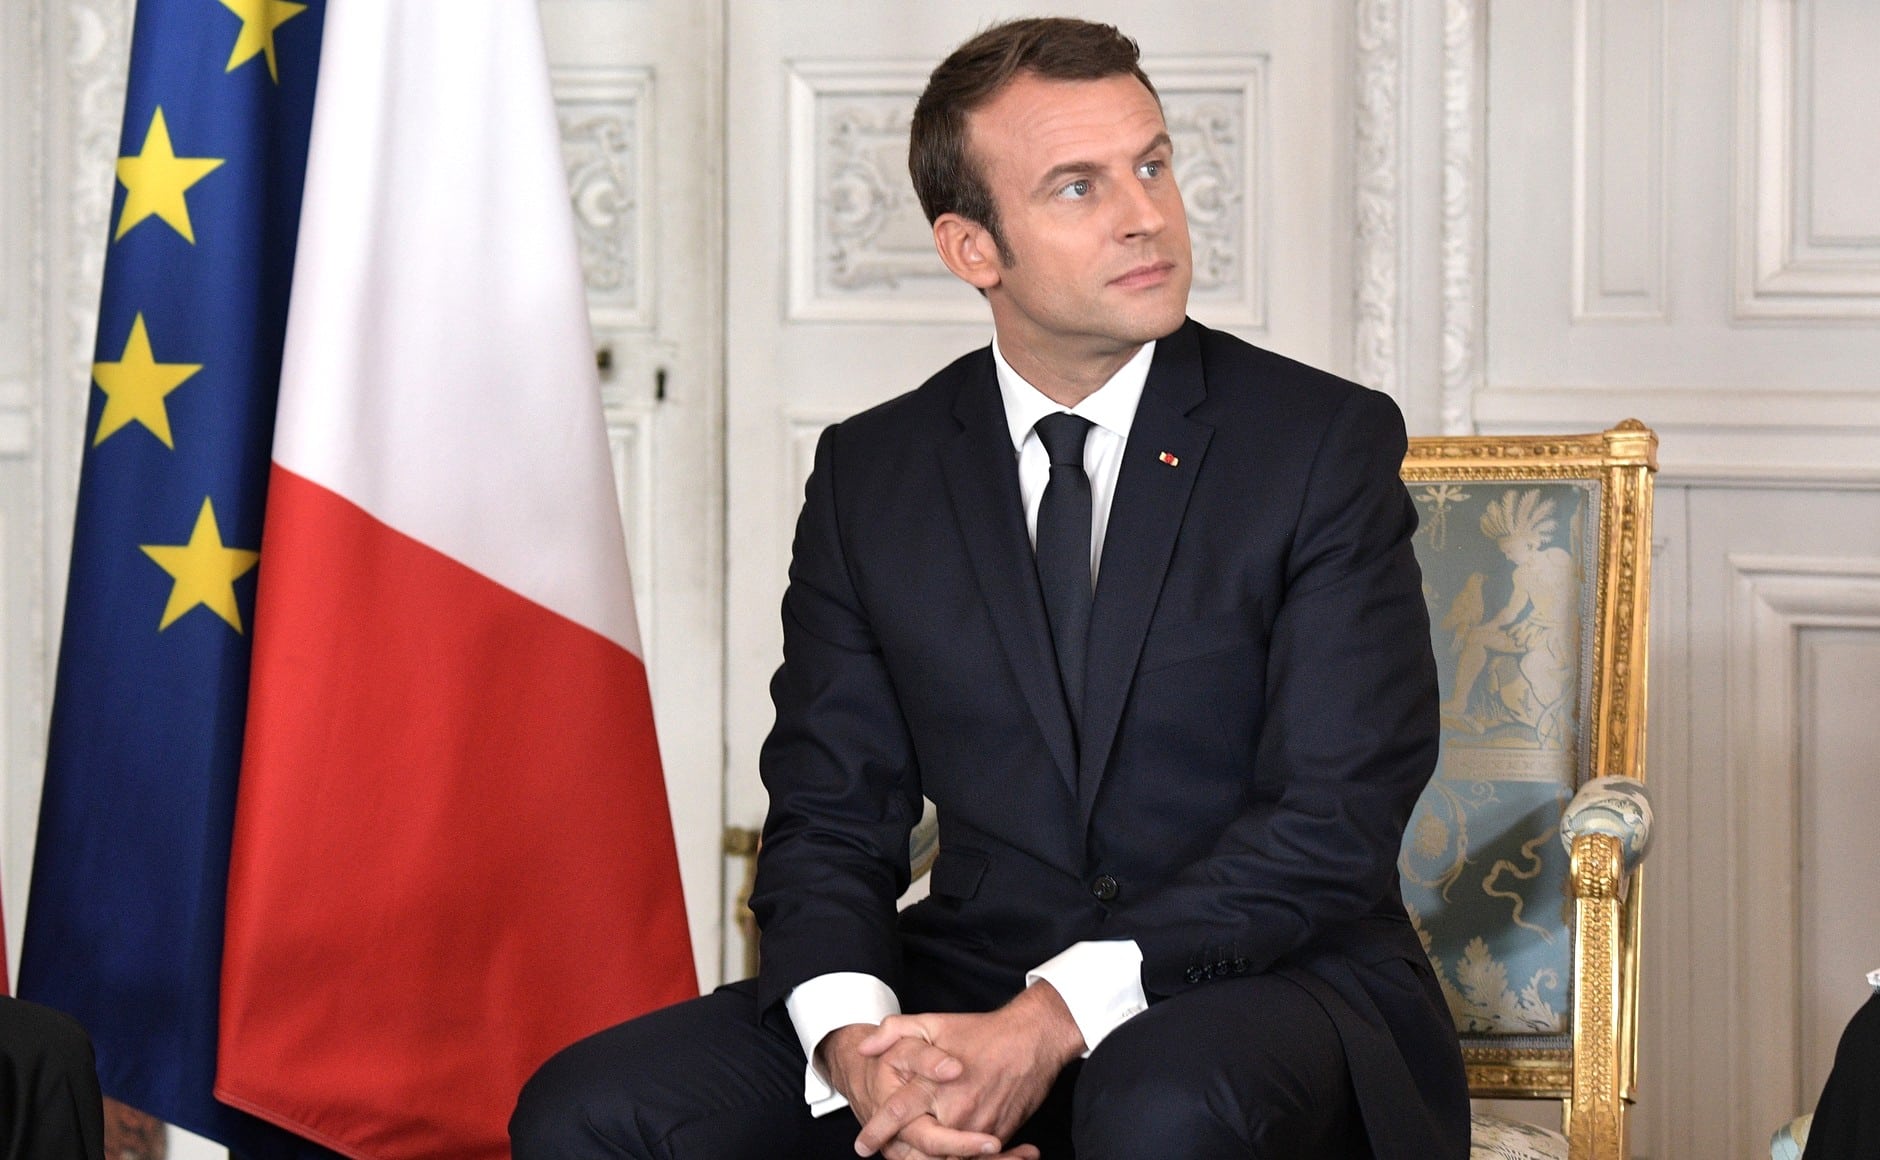 Vladimir_Putin_and_Emmanuel_Macron_(2017-05-29)_06